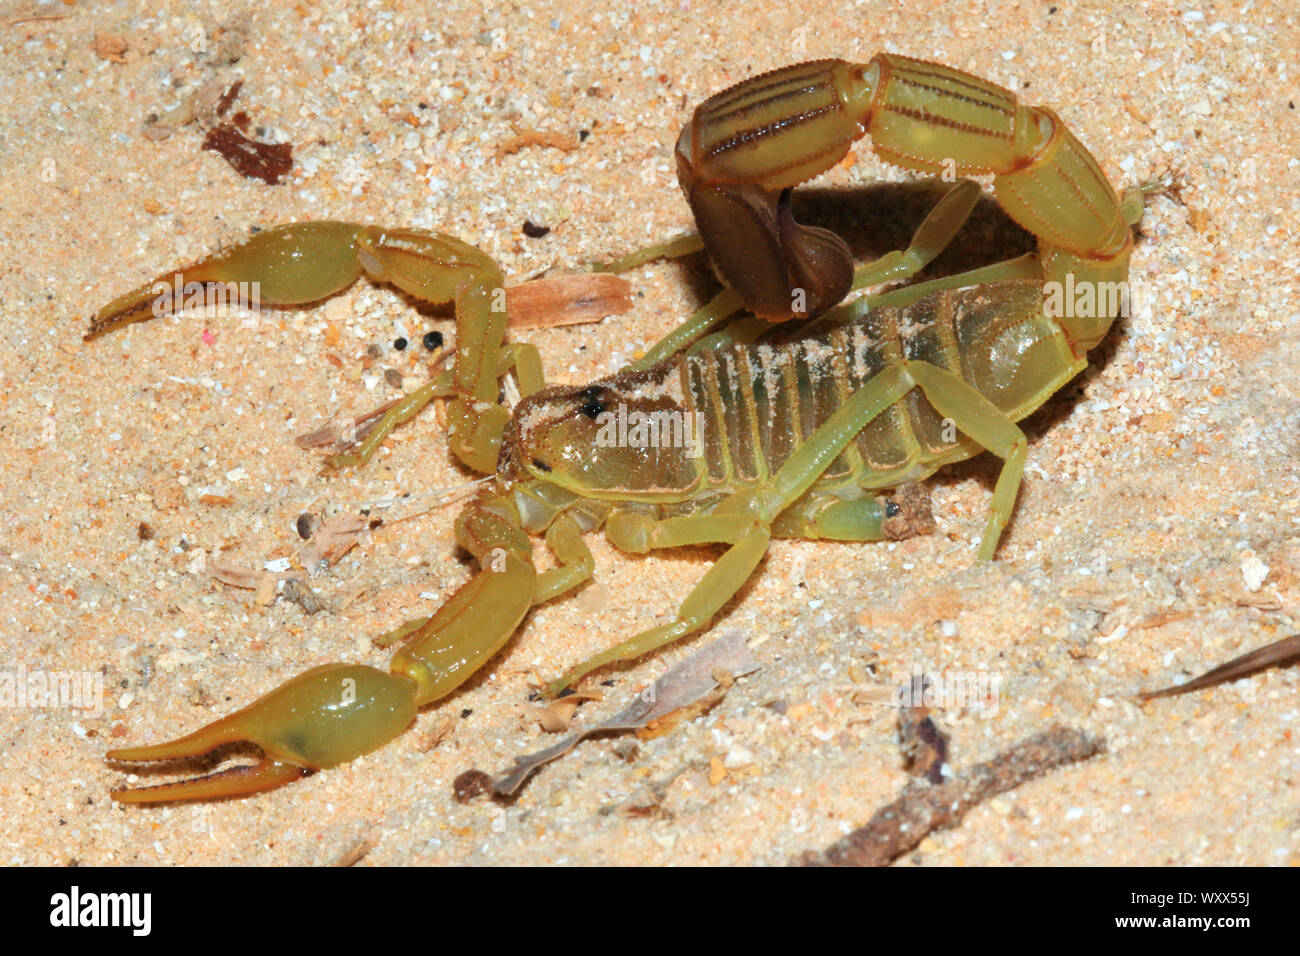 Cola de materia grasa amarilla Scorpion (Androctonus australis) en arena, Mauritania Foto de stock